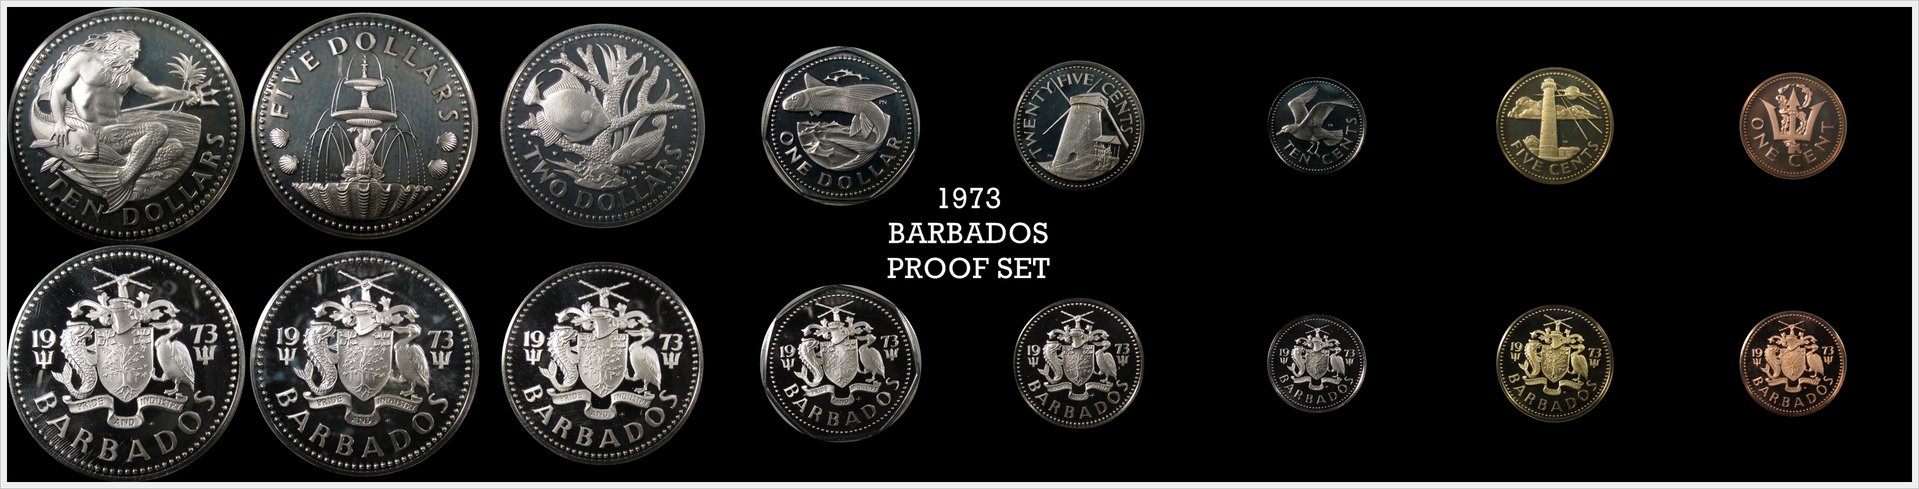 Barbados 1973 Proof Set.jpg